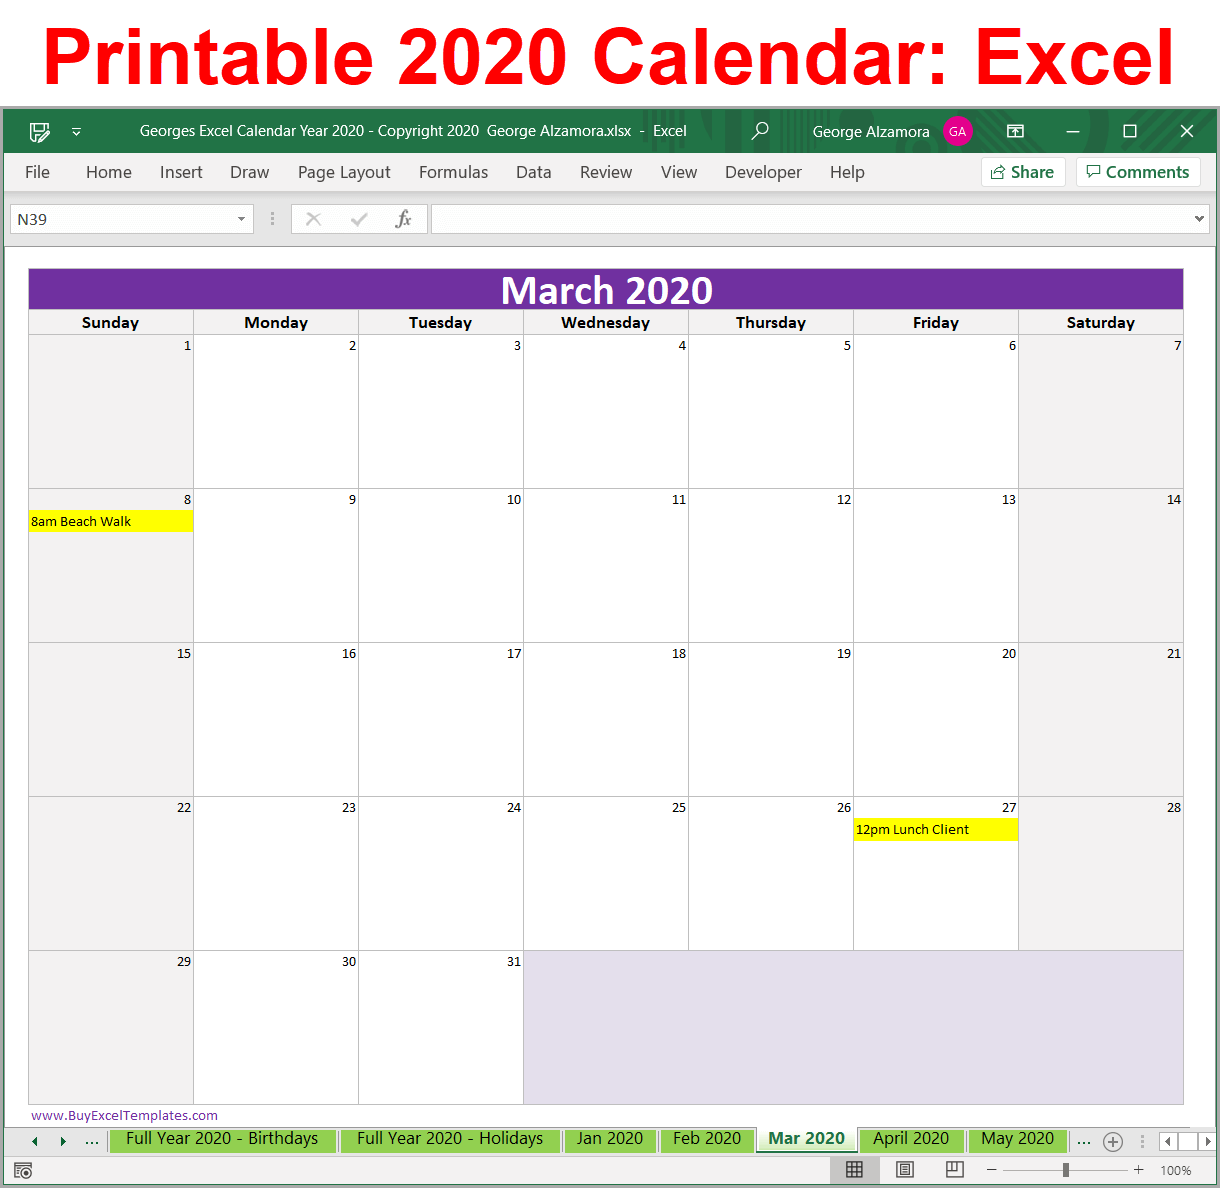 Printable 2020 calendar Excel